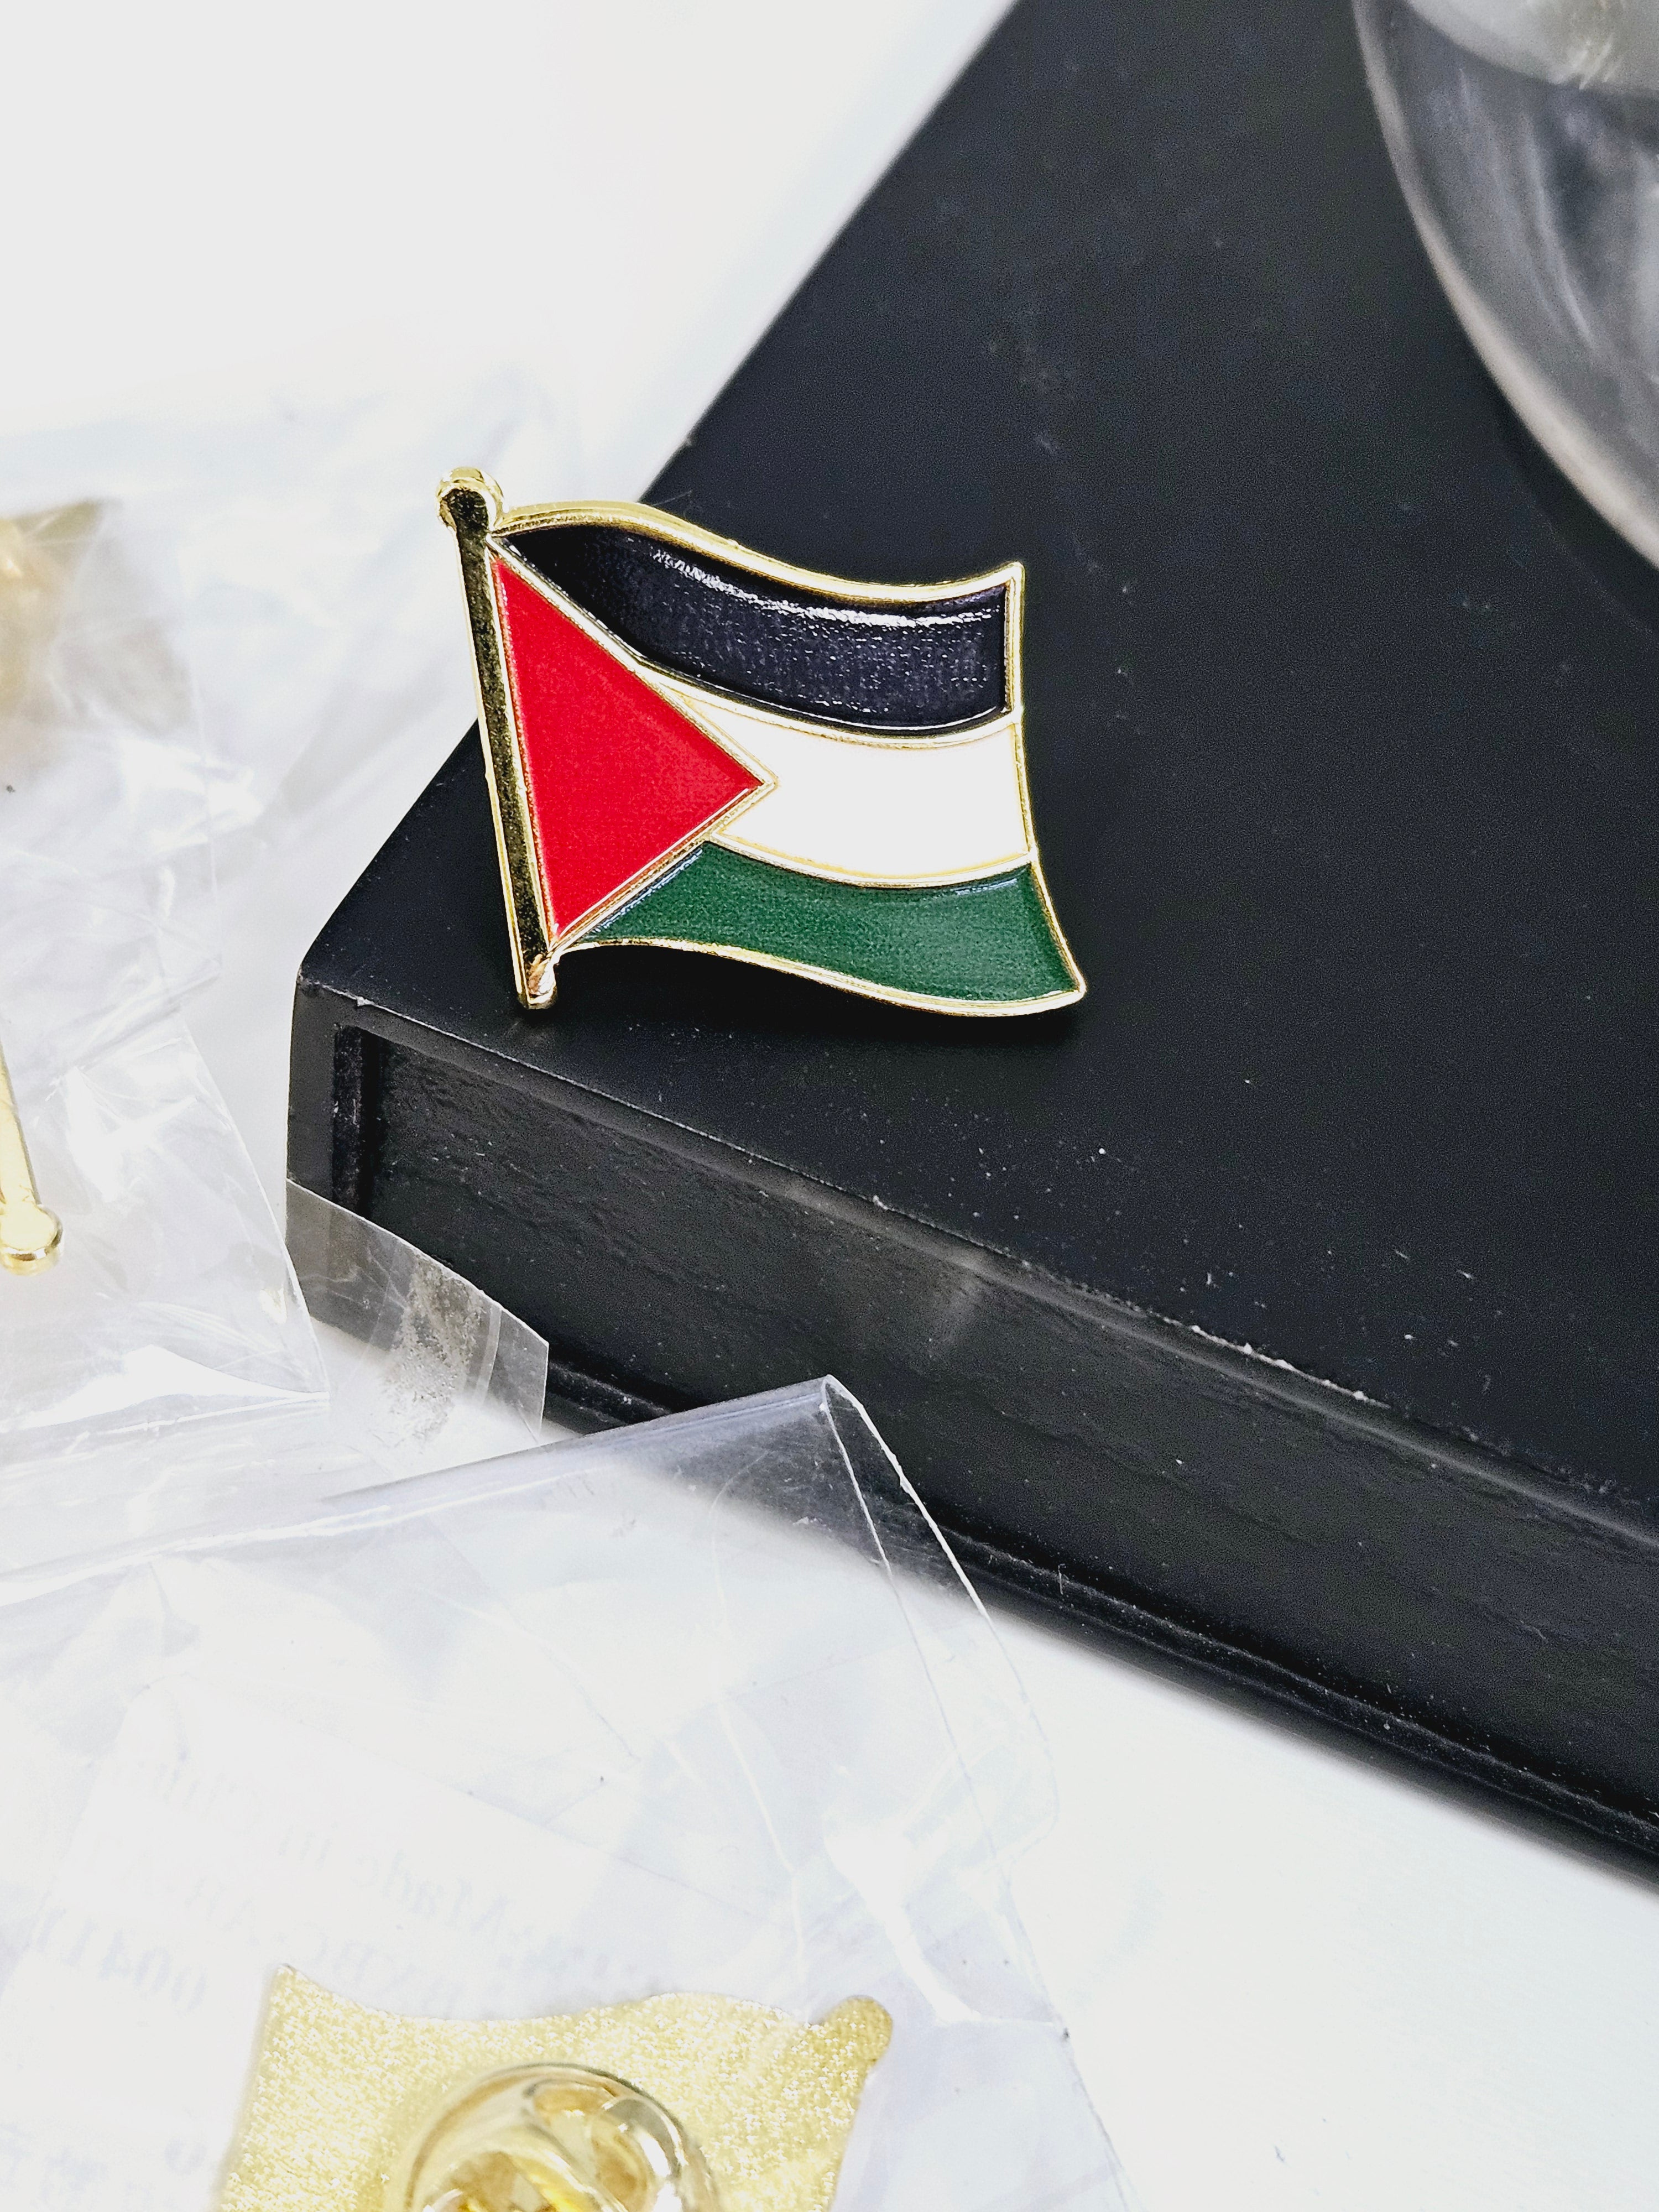 Palestine Flag Pin Lapel Stainless Steel - Habibi Heritage